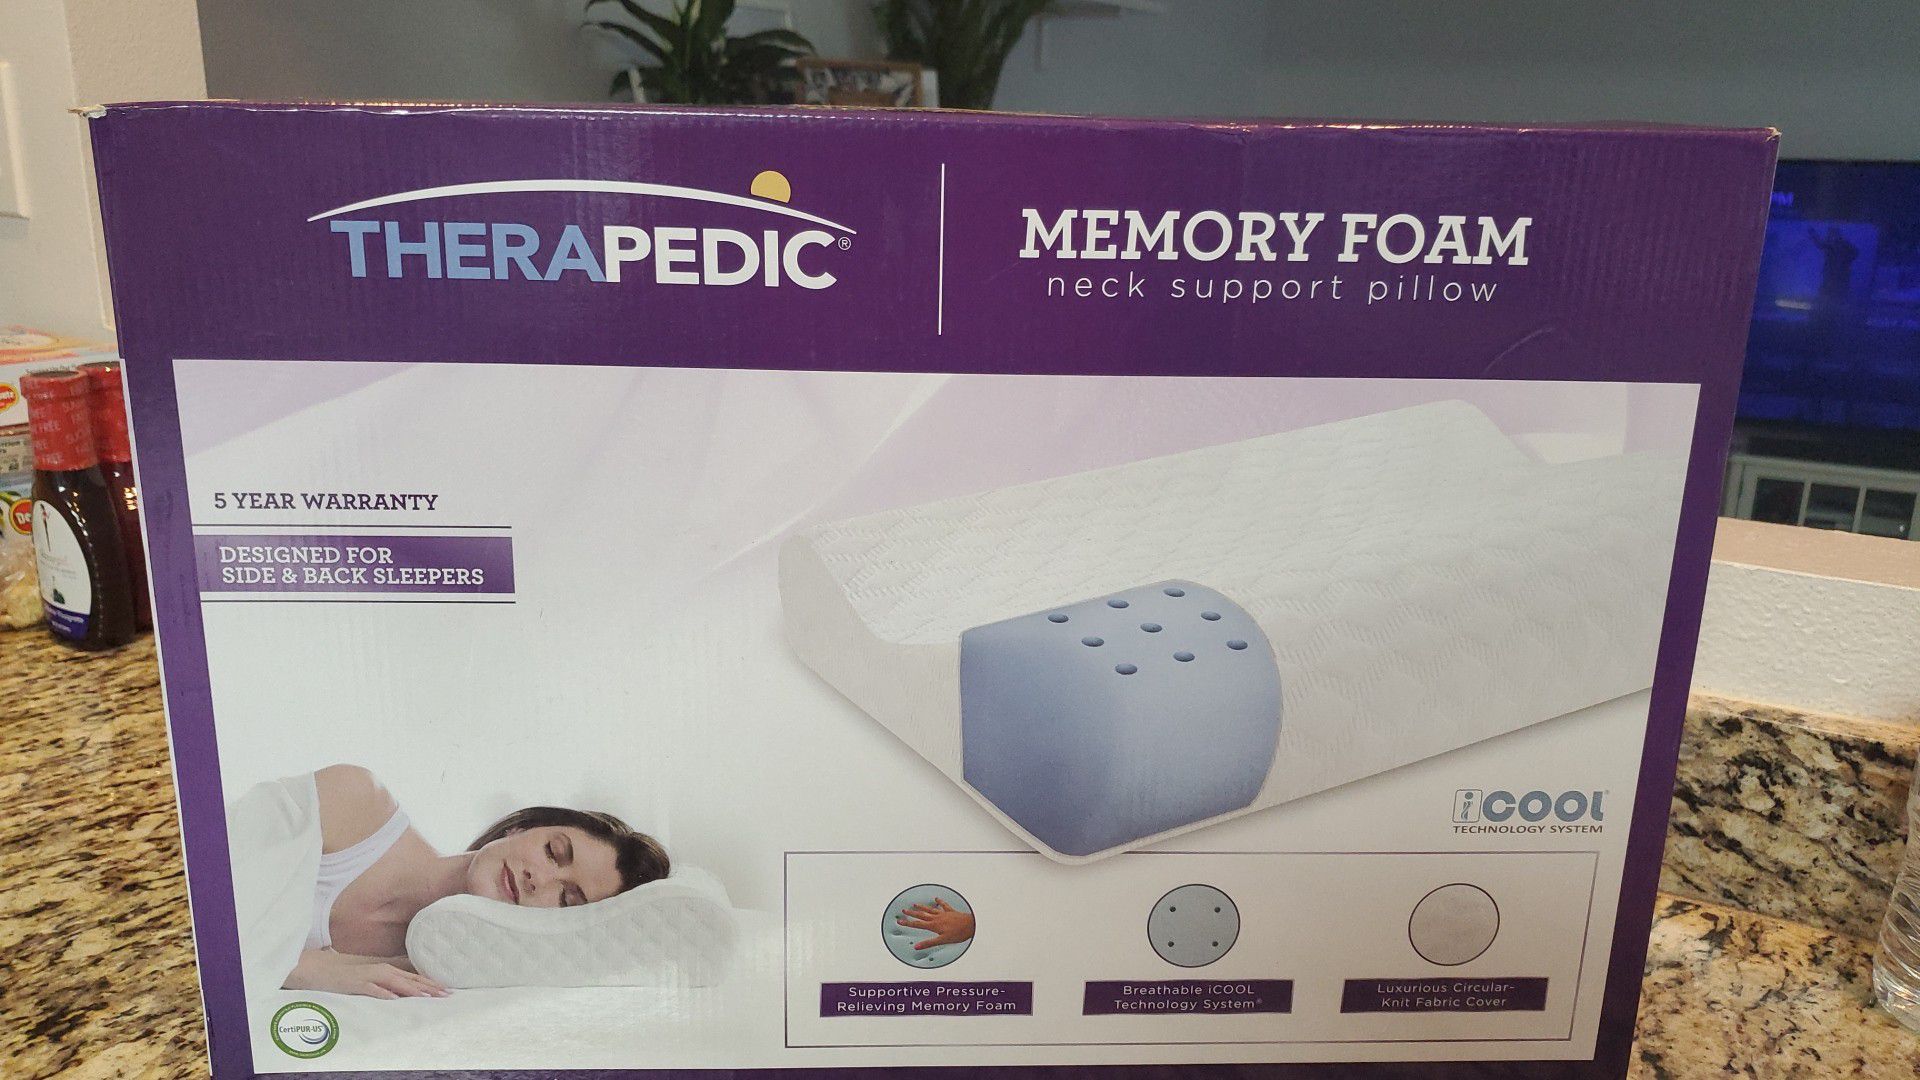 Therapedic memory foam neck support pillow